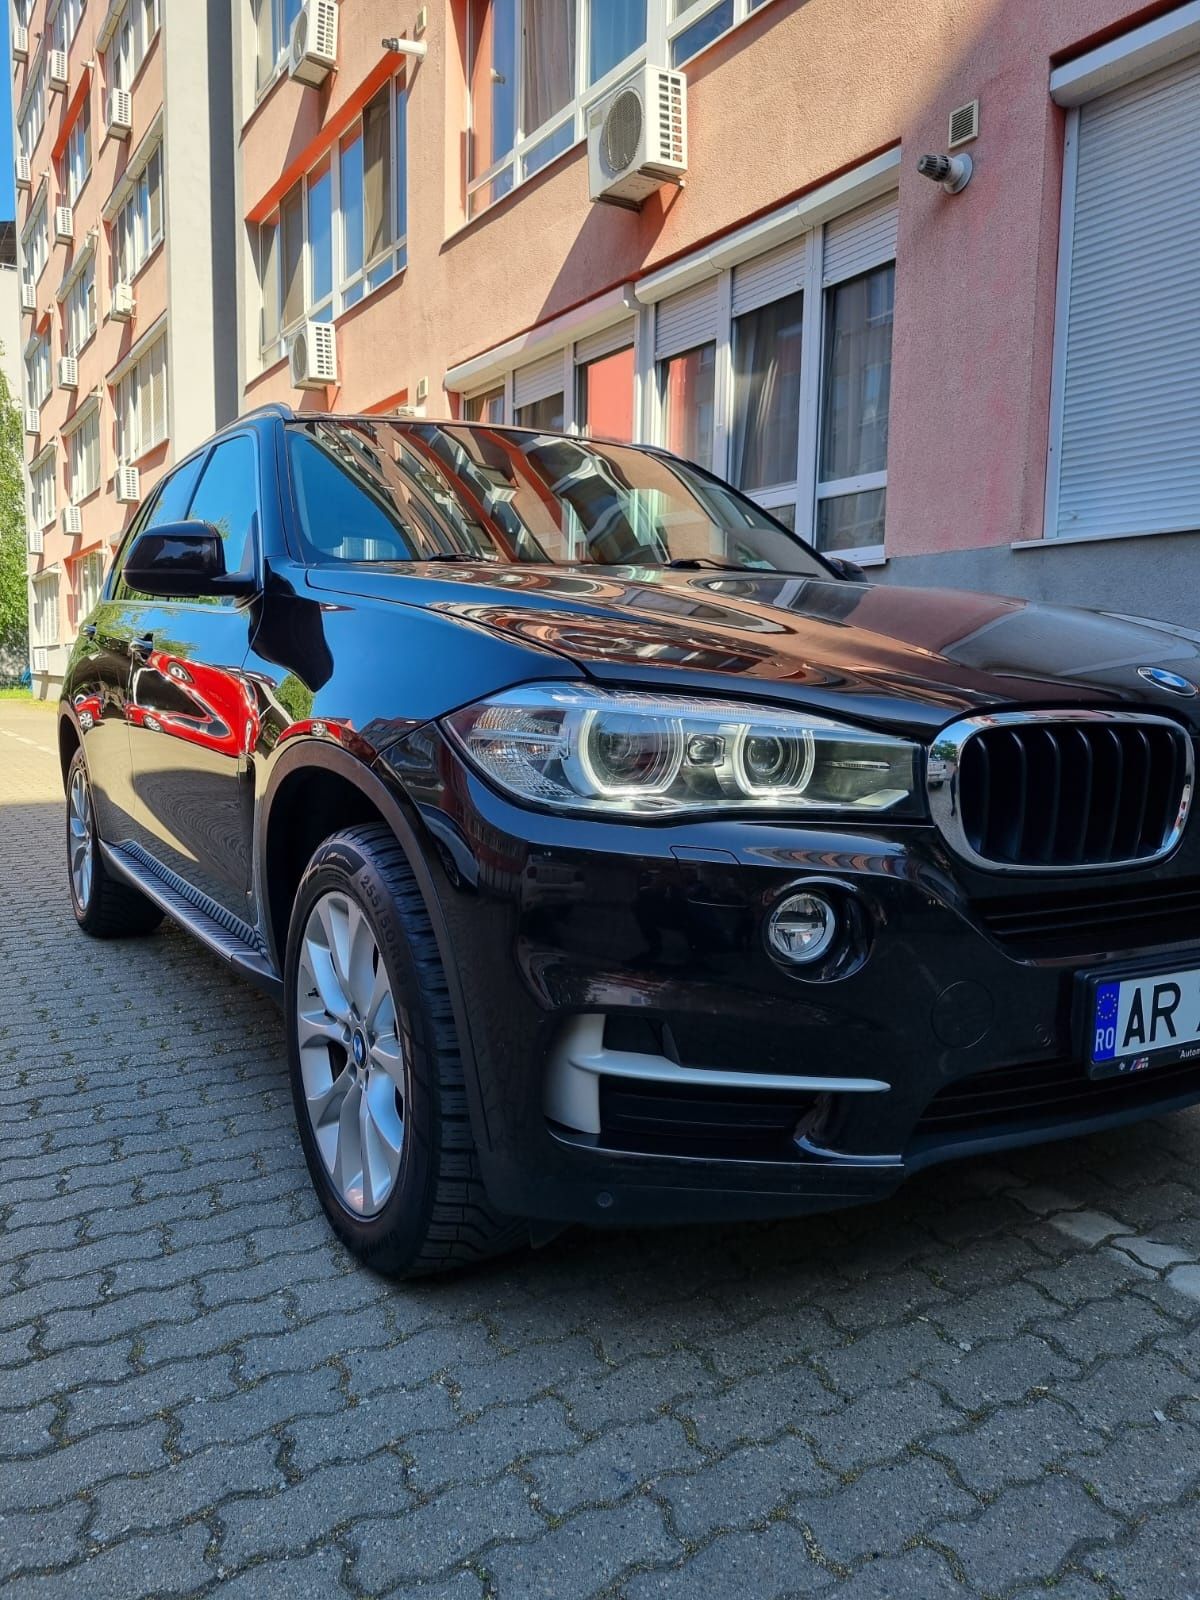 Vând BMW X5 f15 2014 3.0 diesel 20.000 euro